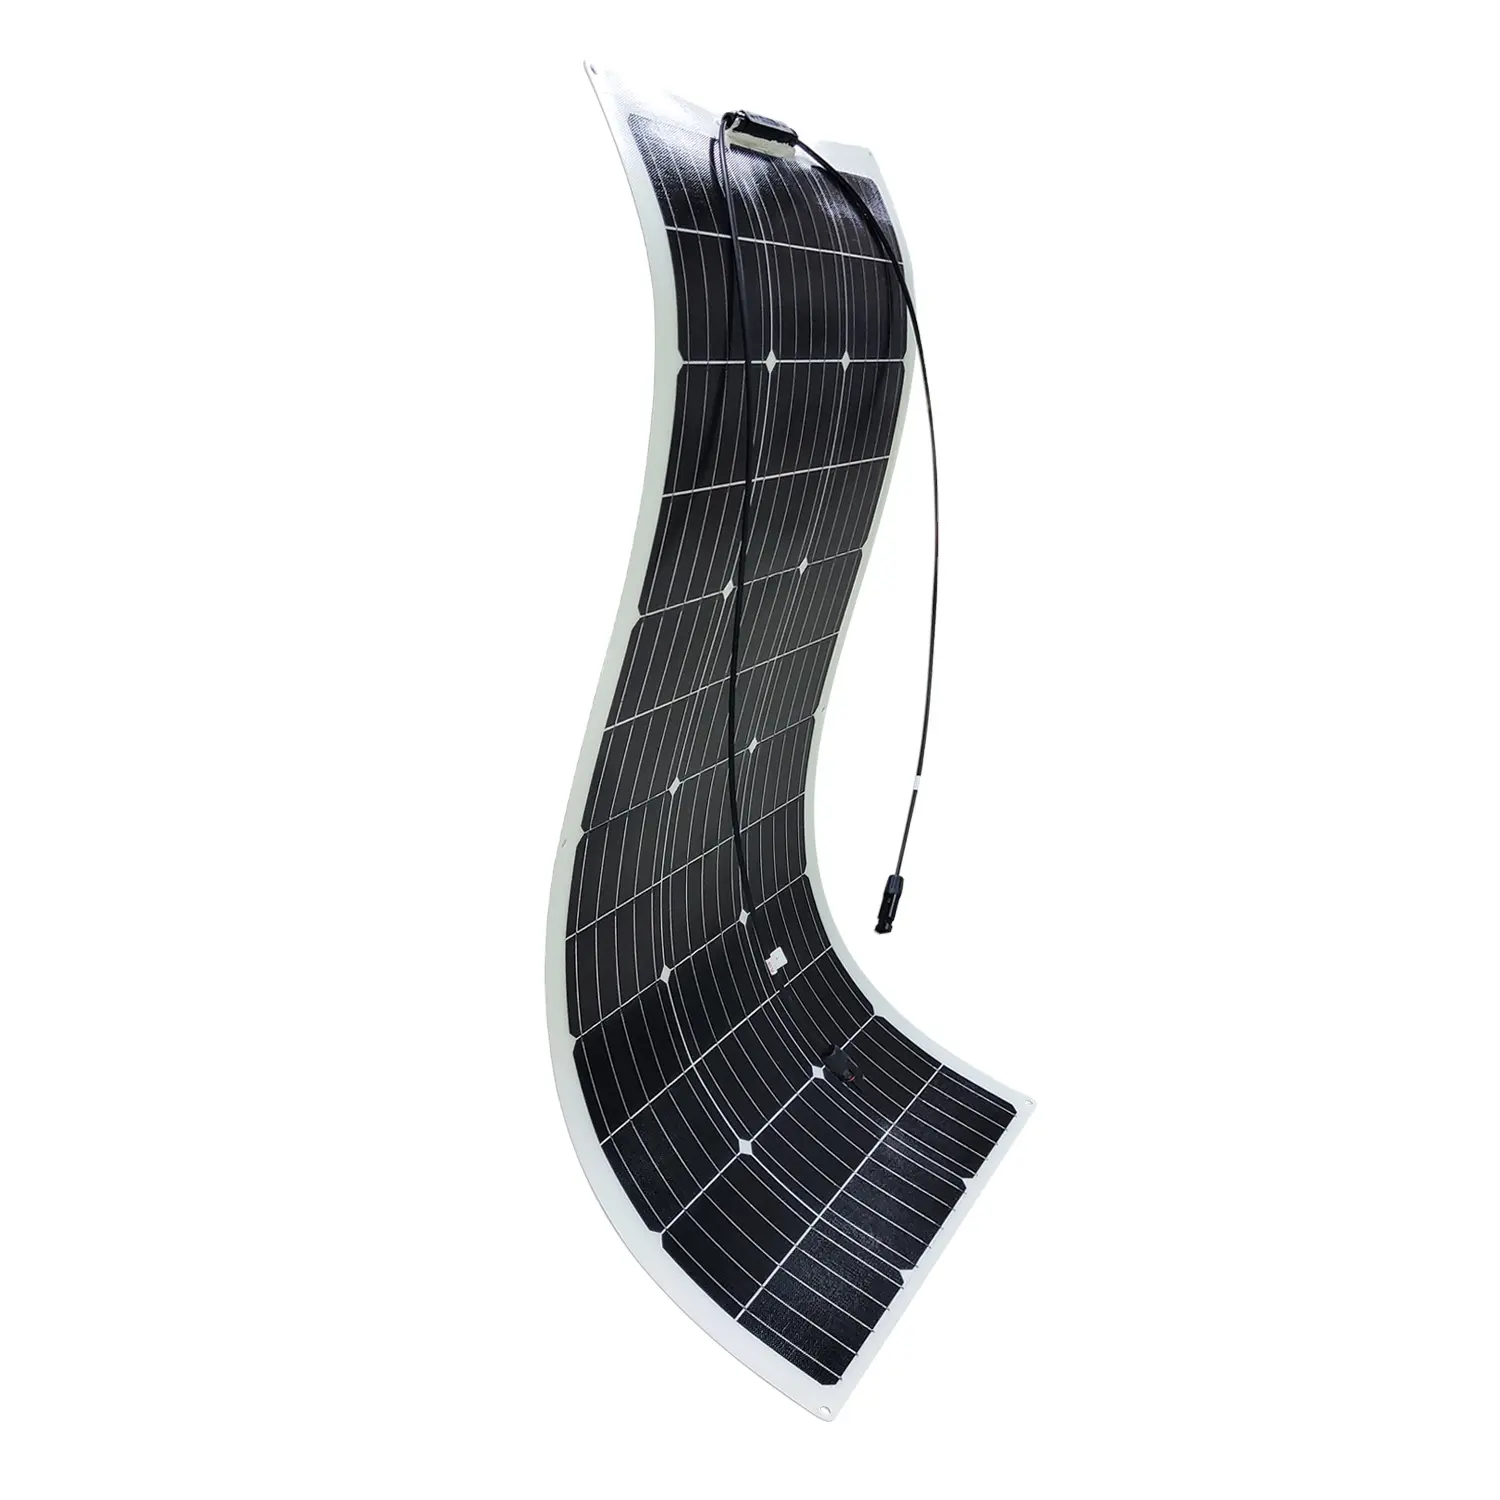 12V flexibles Solar panel für Auto, Boot, halb flexibles Modul 110W